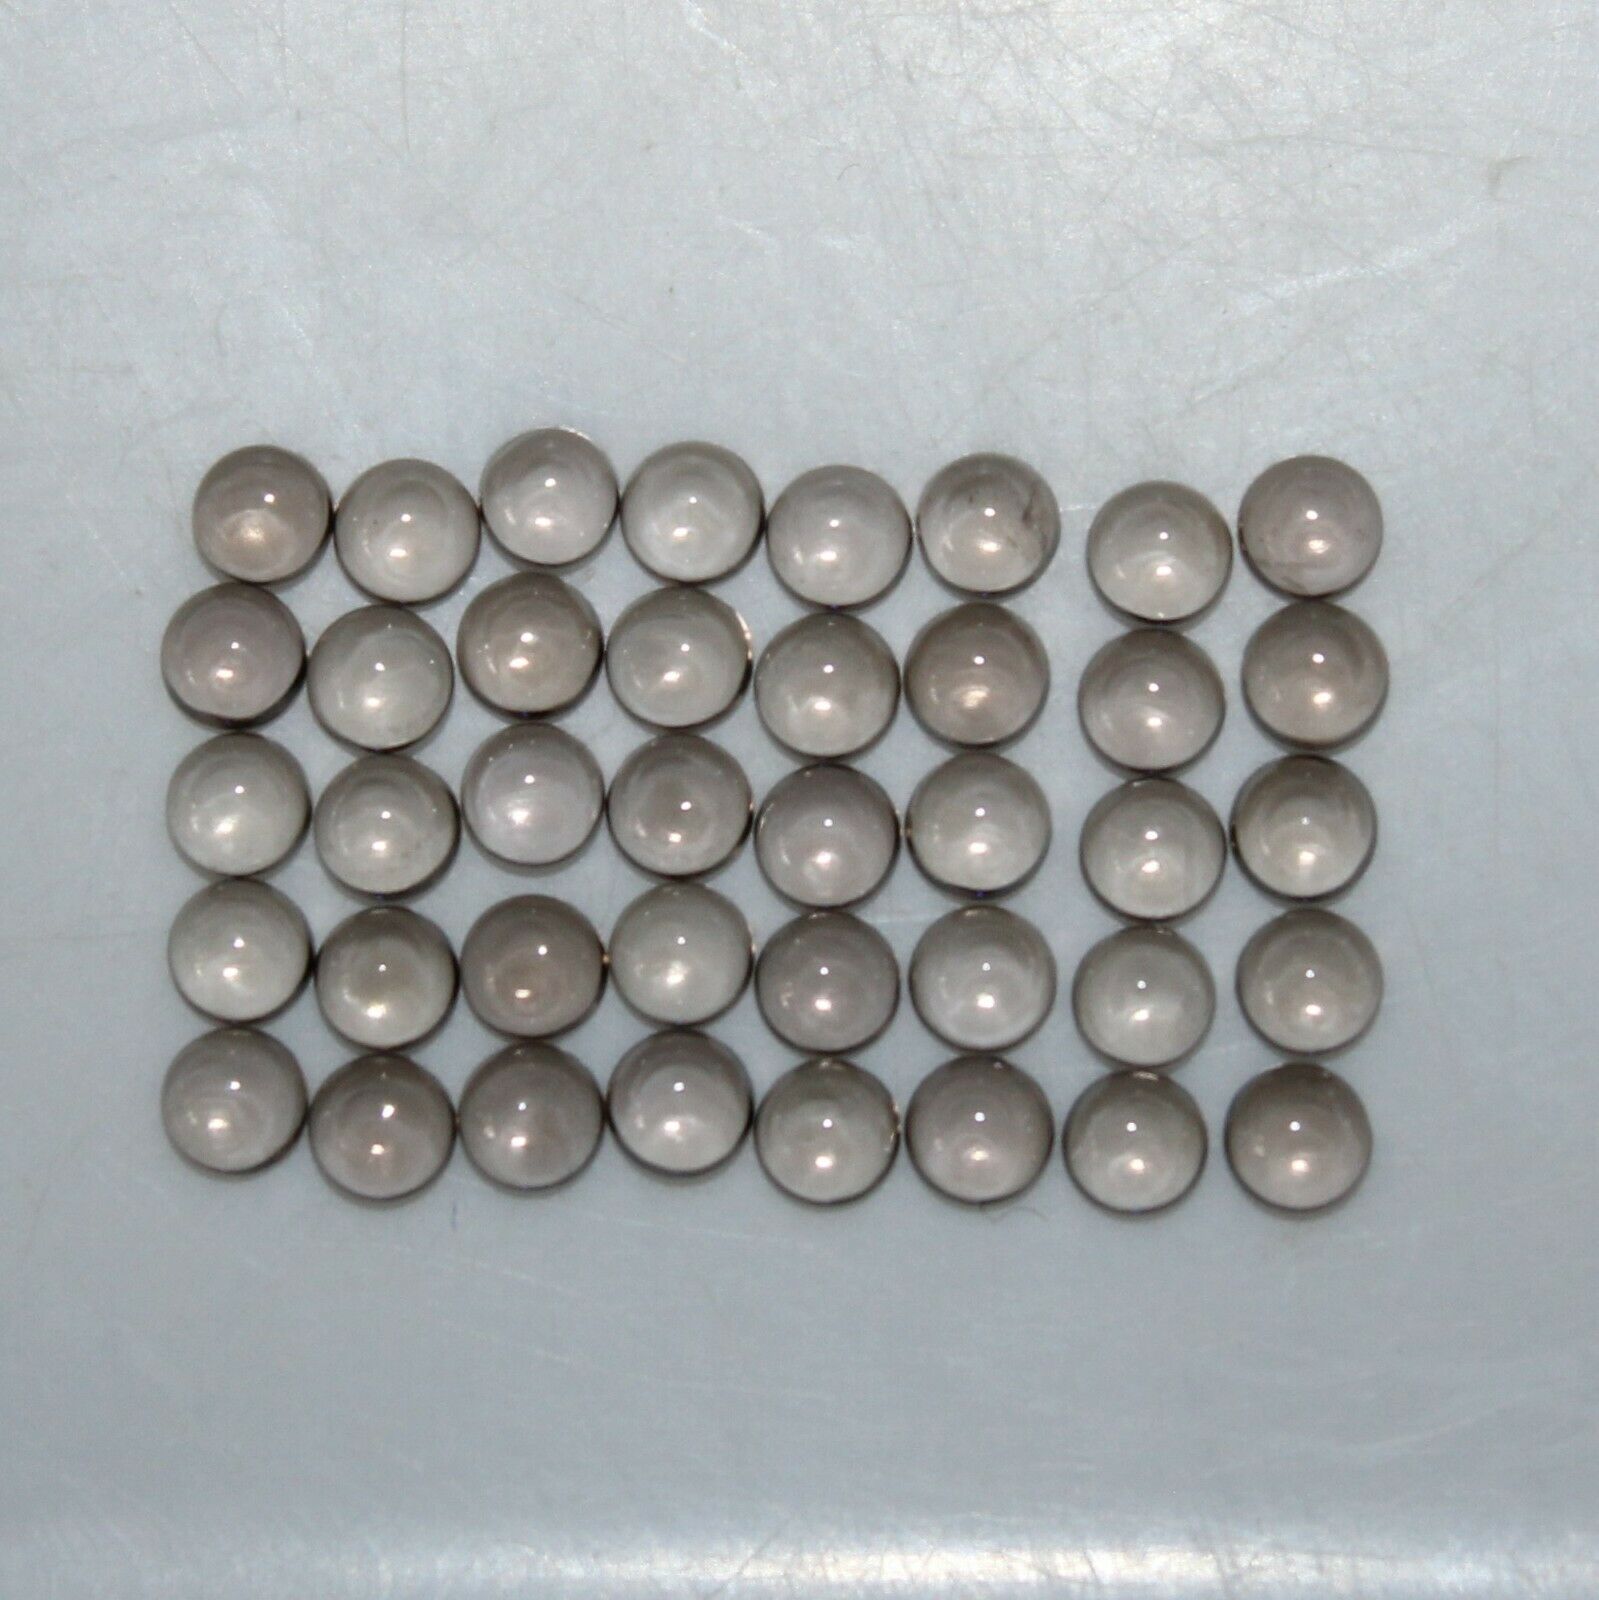 Smoky Quartz 3mm To 10mm Round Cabochon Loose Gemstones W/ Multi-qty Options